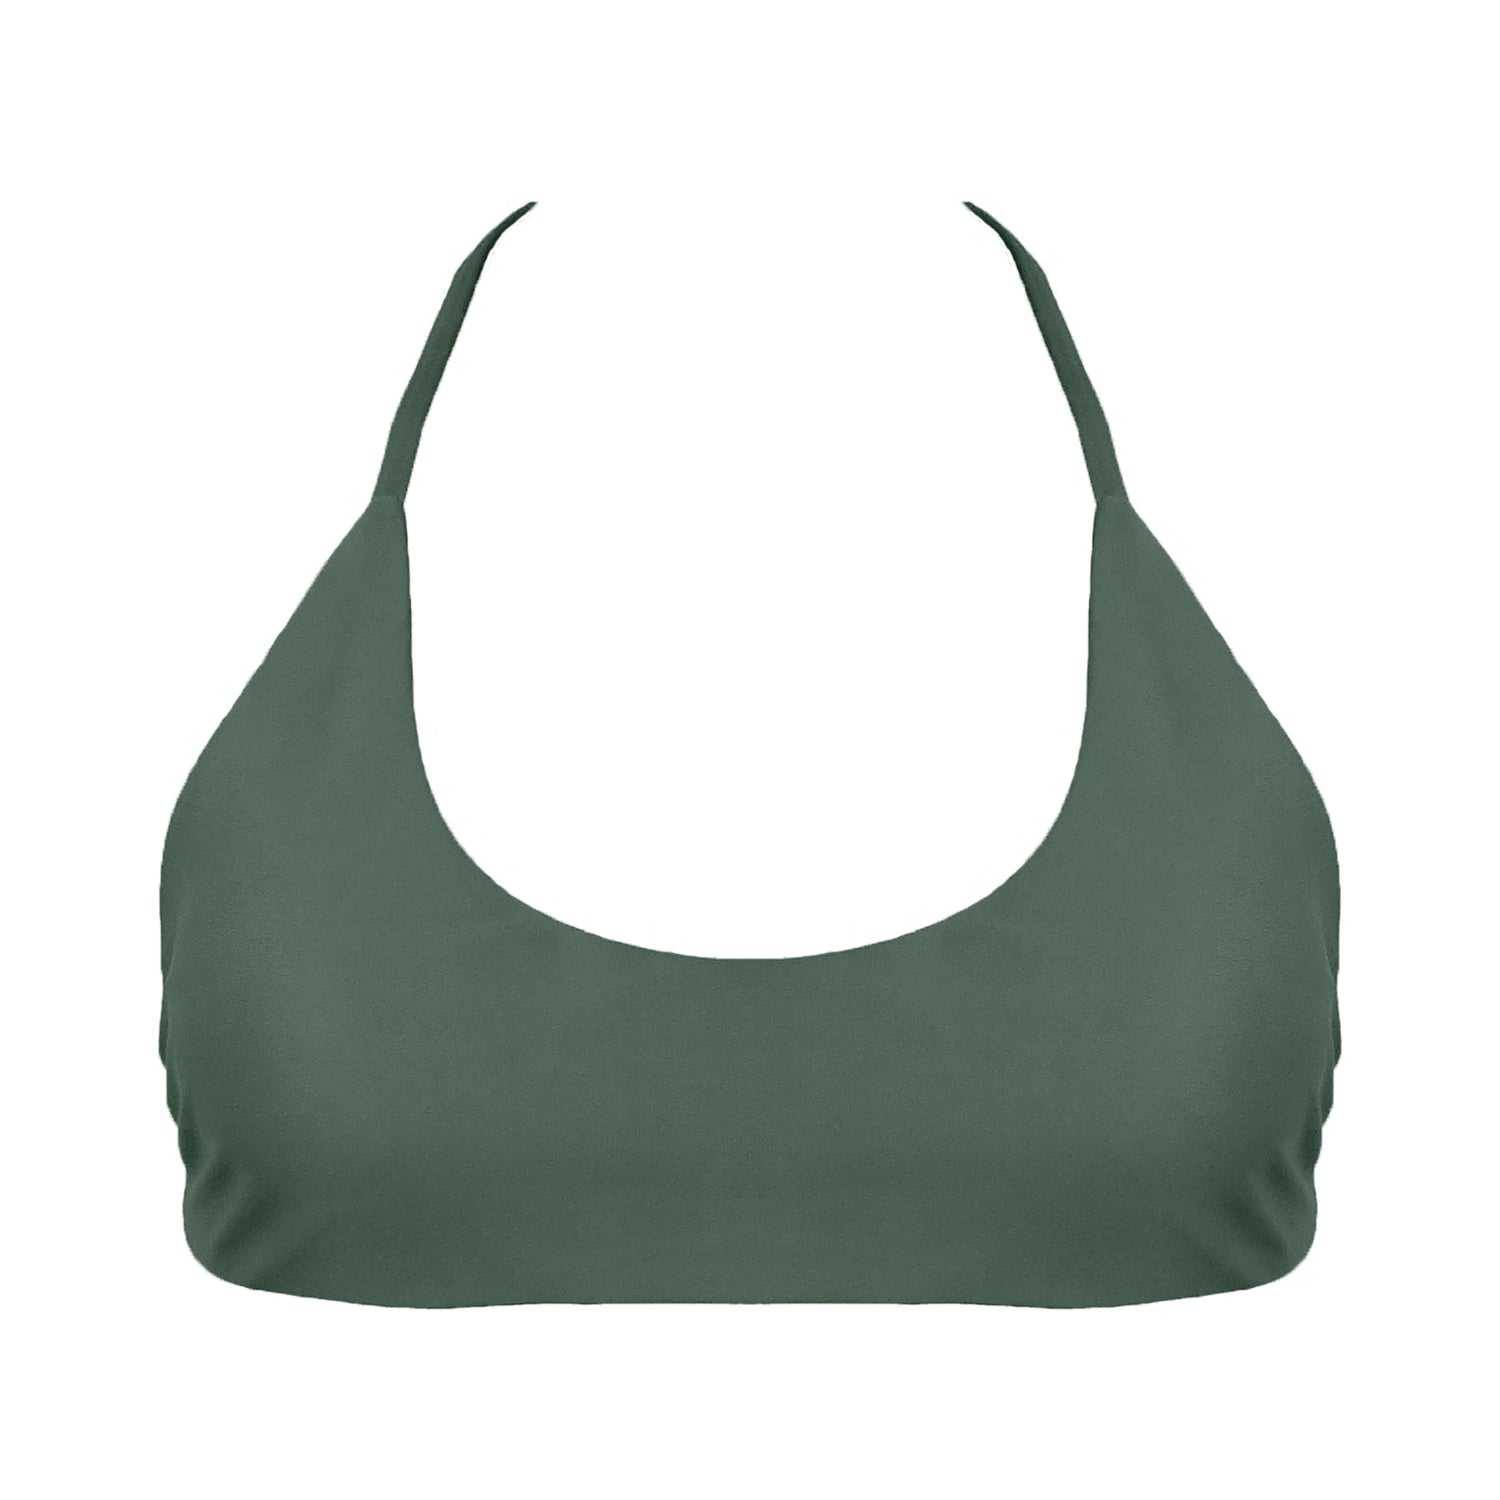 Sage green Sports bra inspired bikini top with a bralette scoop neckline and skinny racerback straps.